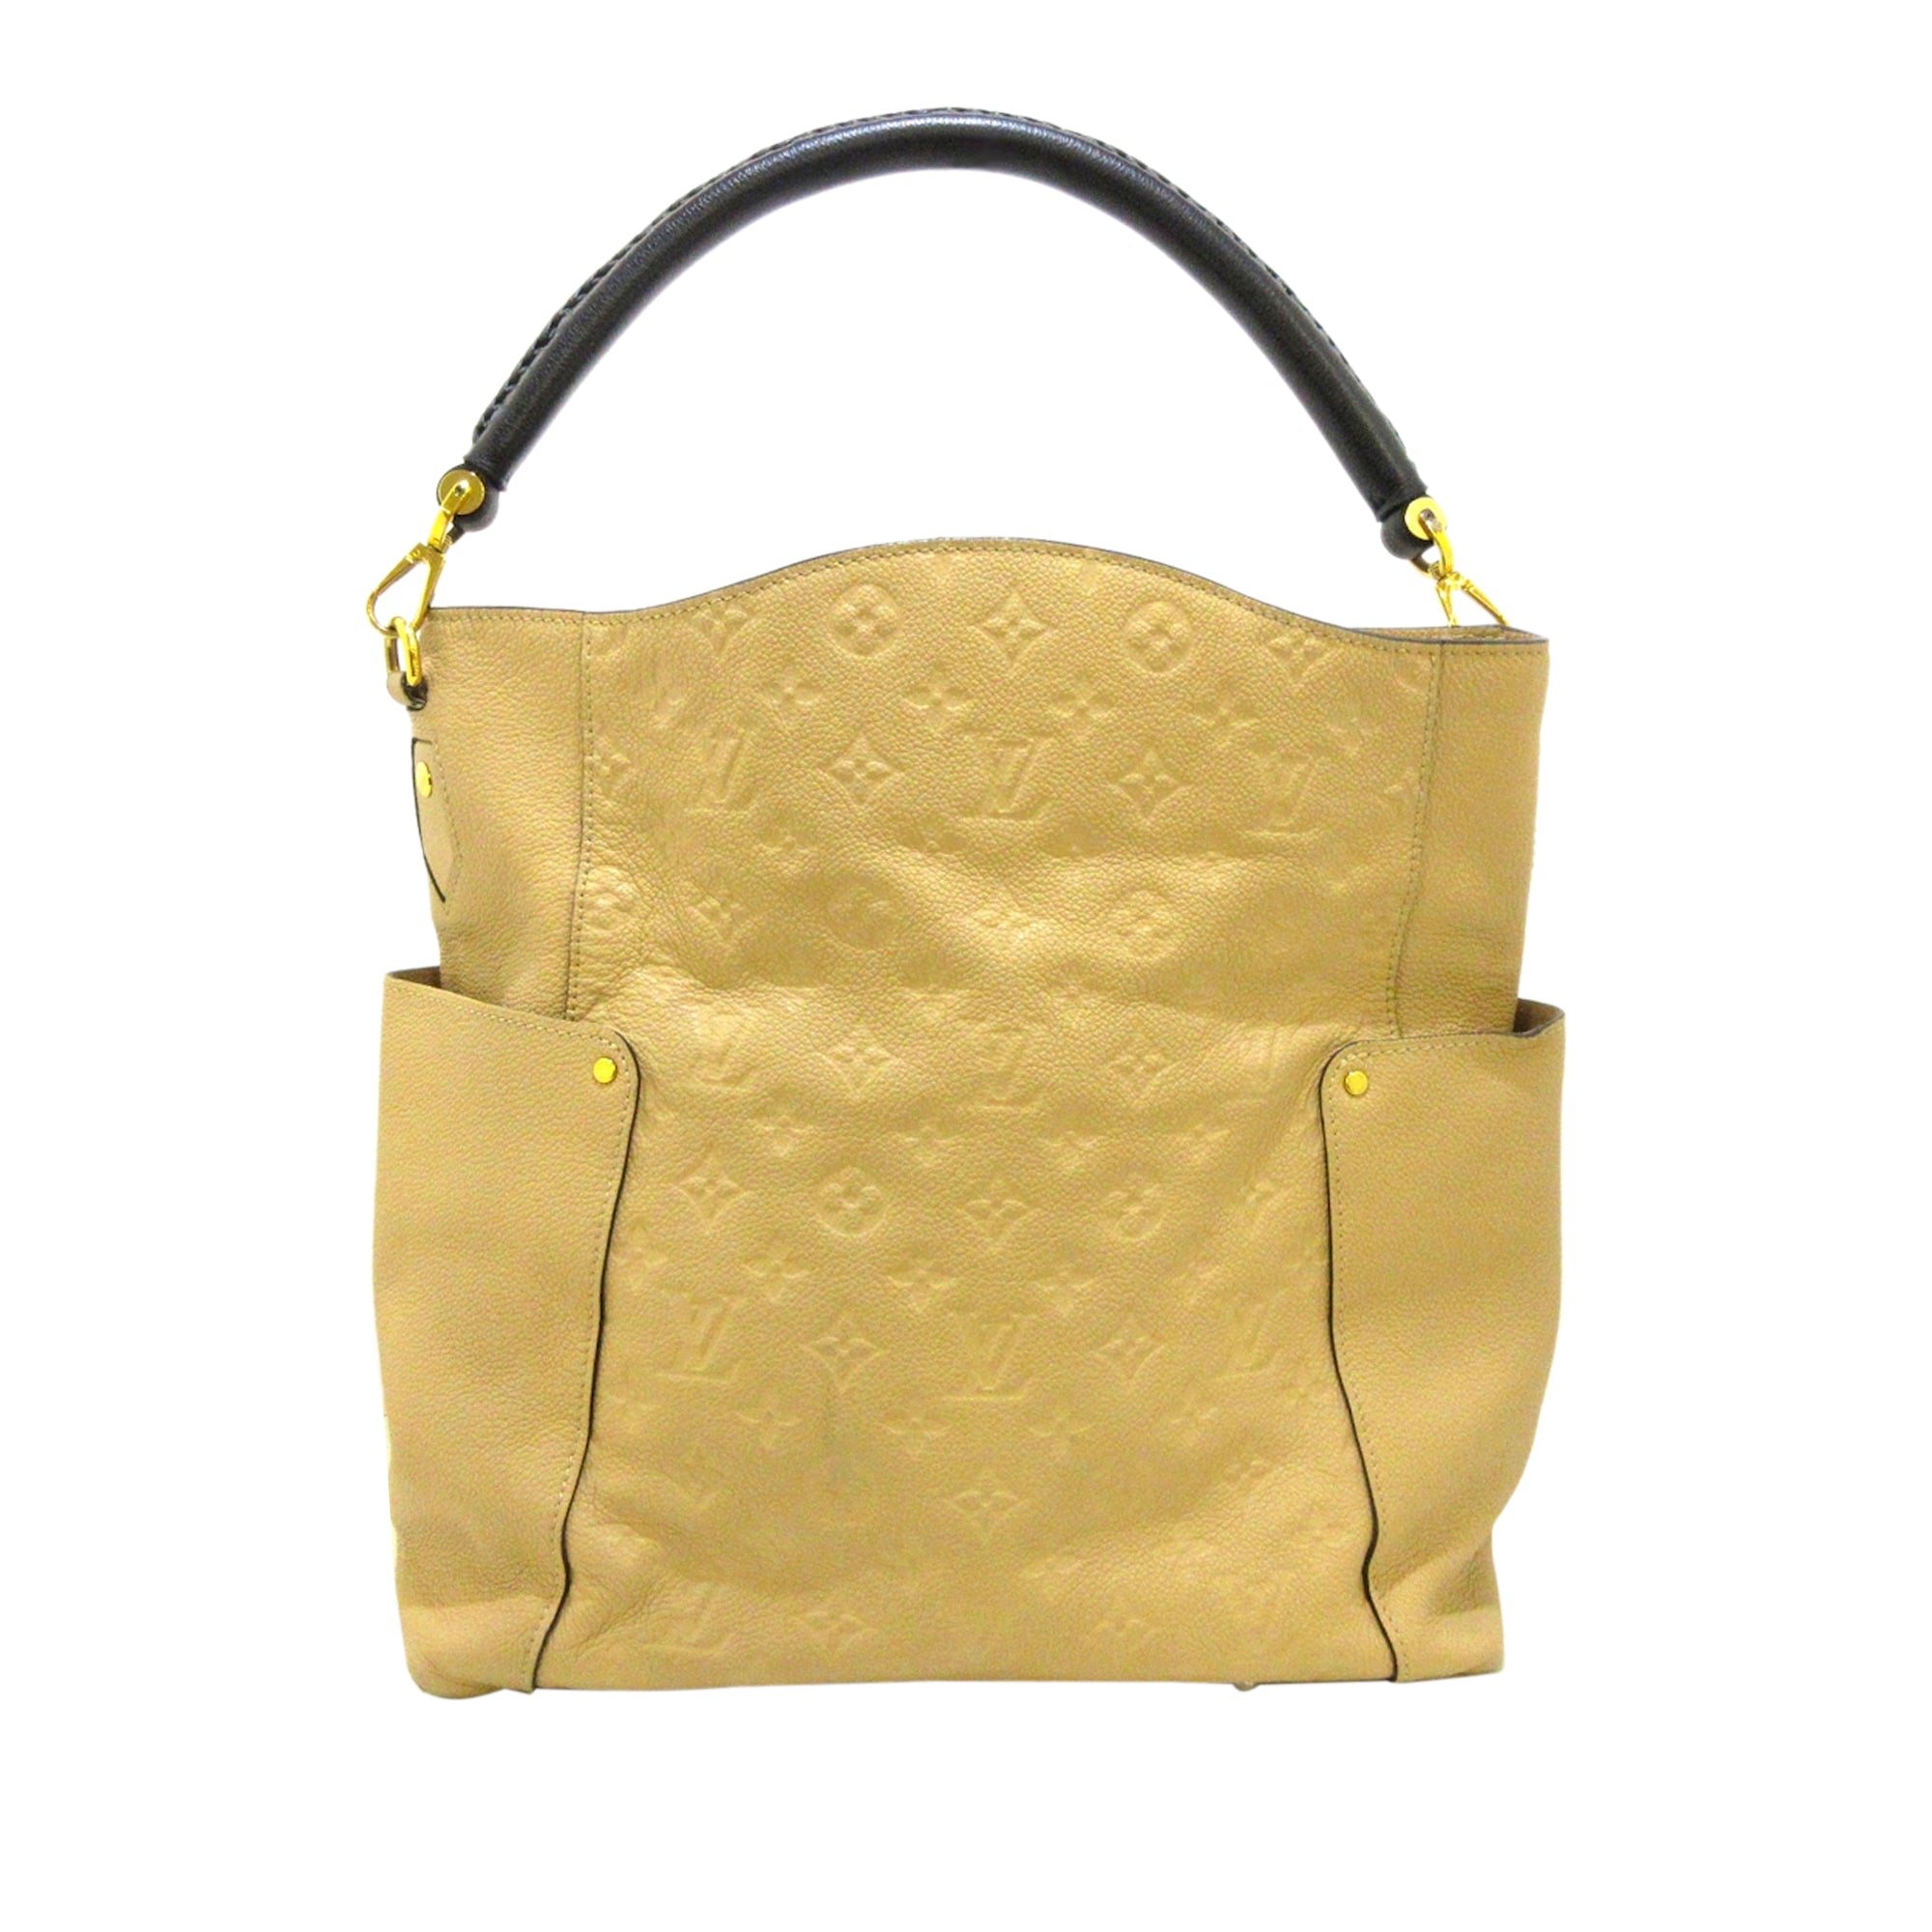 Tan Louis Vuitton Monogram Mat Malden Business Bag